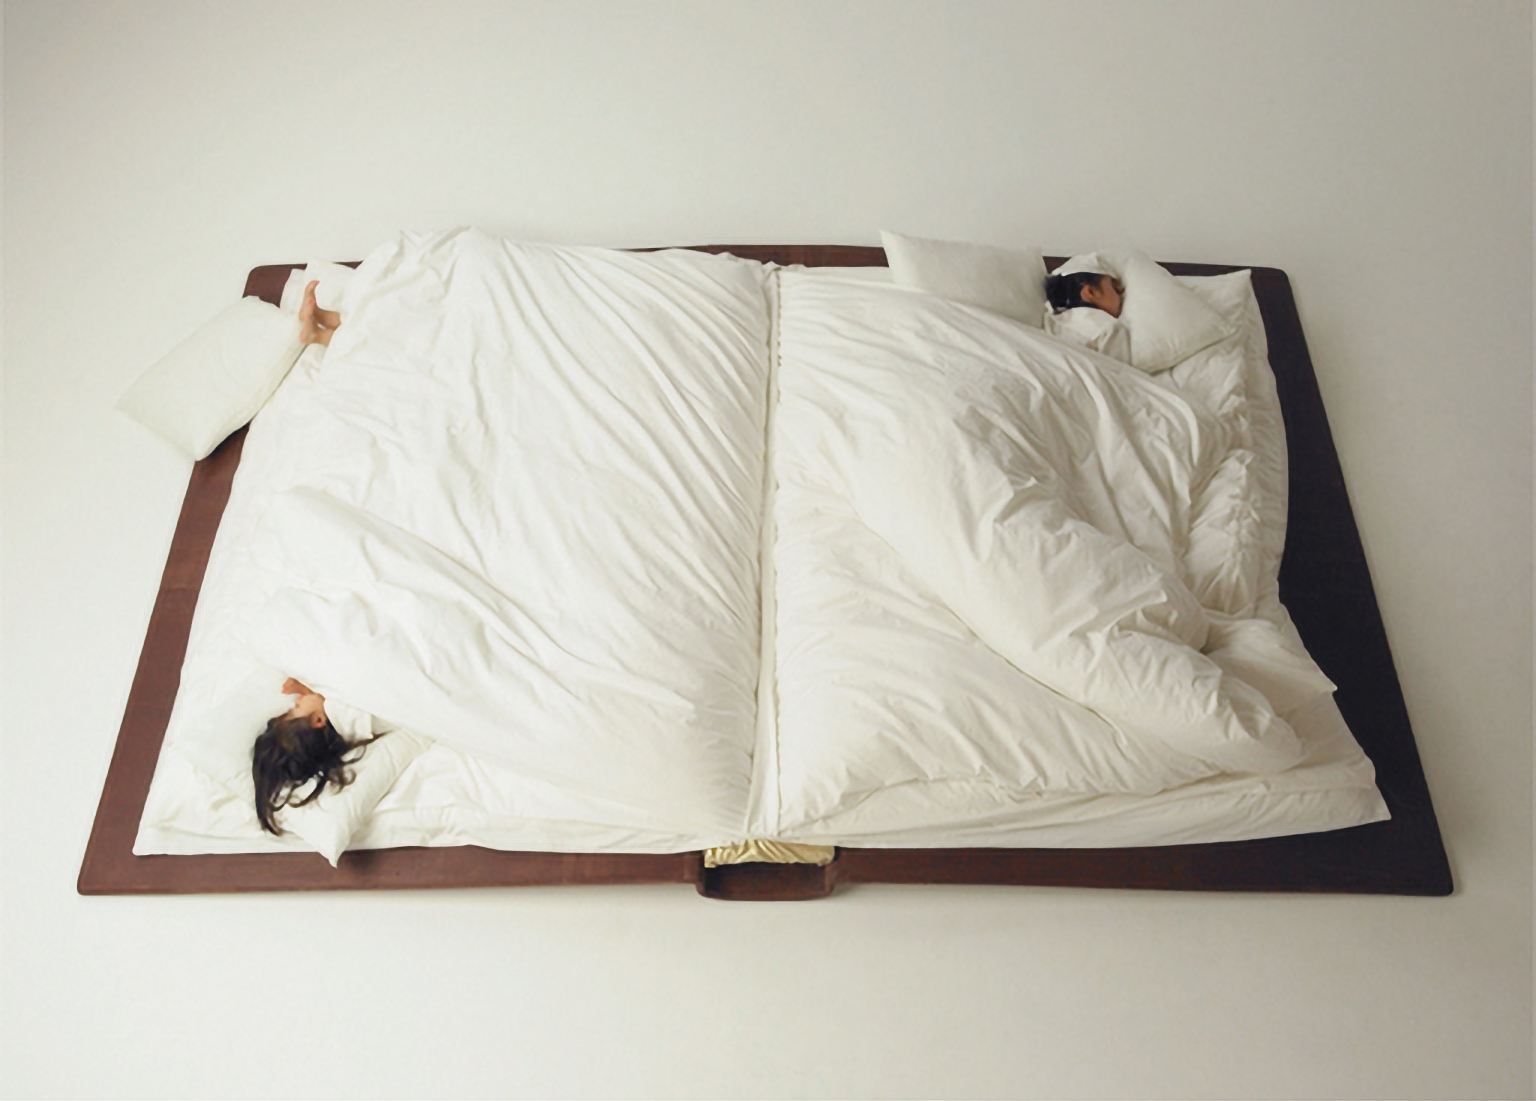 Book Shaped Bed by Yusuke Suzuki